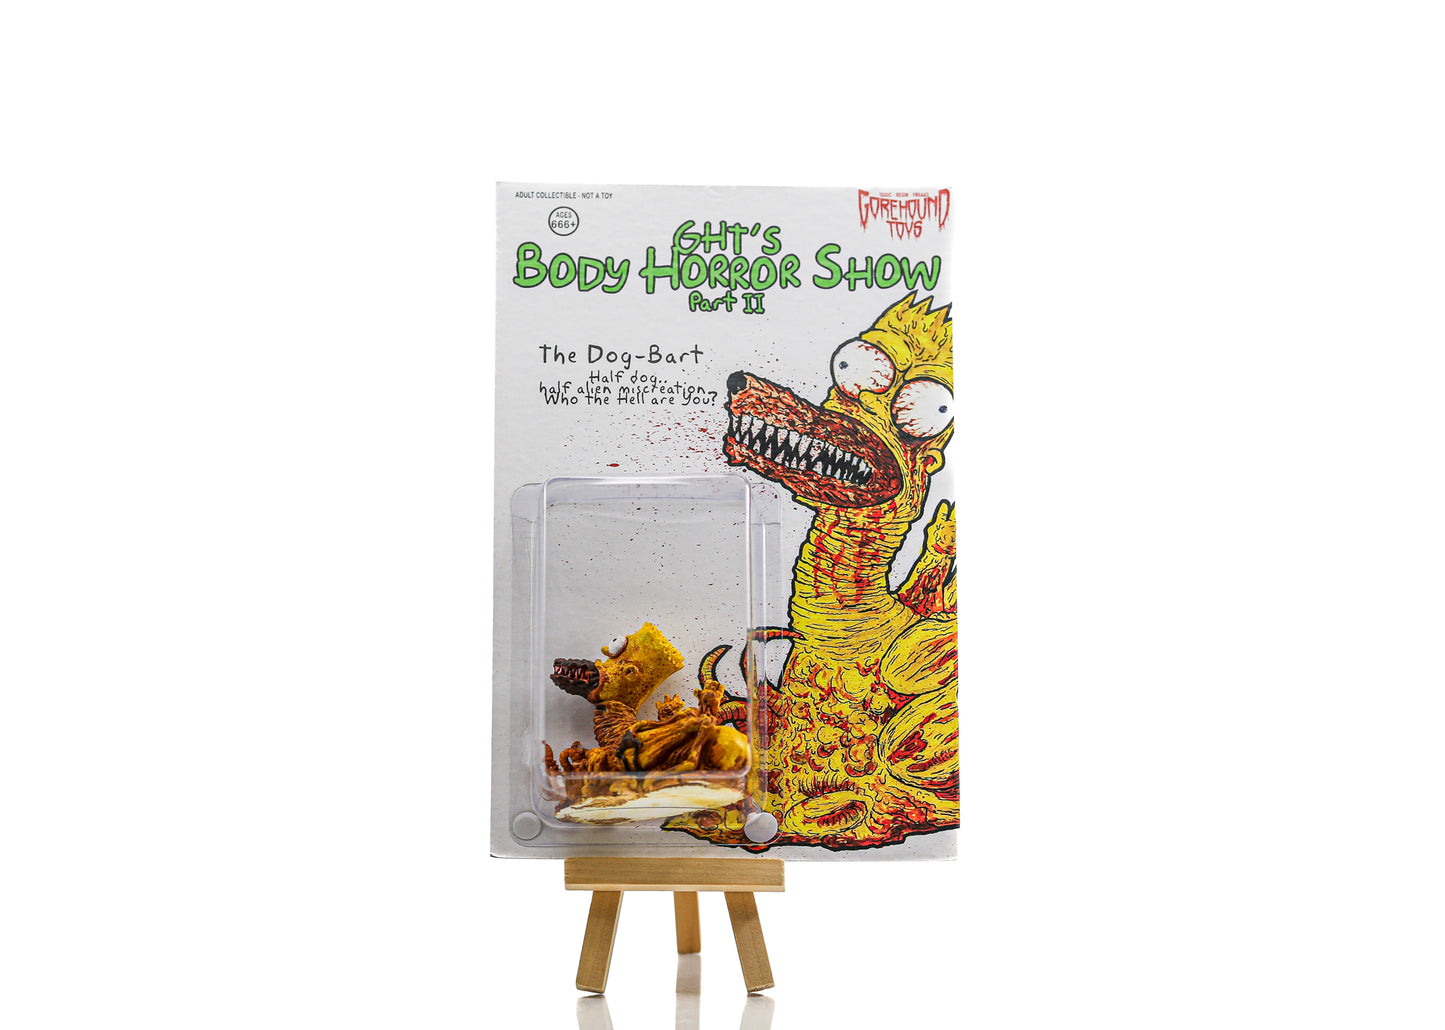 GoreHound Toys "The Dog-Bart" Body Horror Show